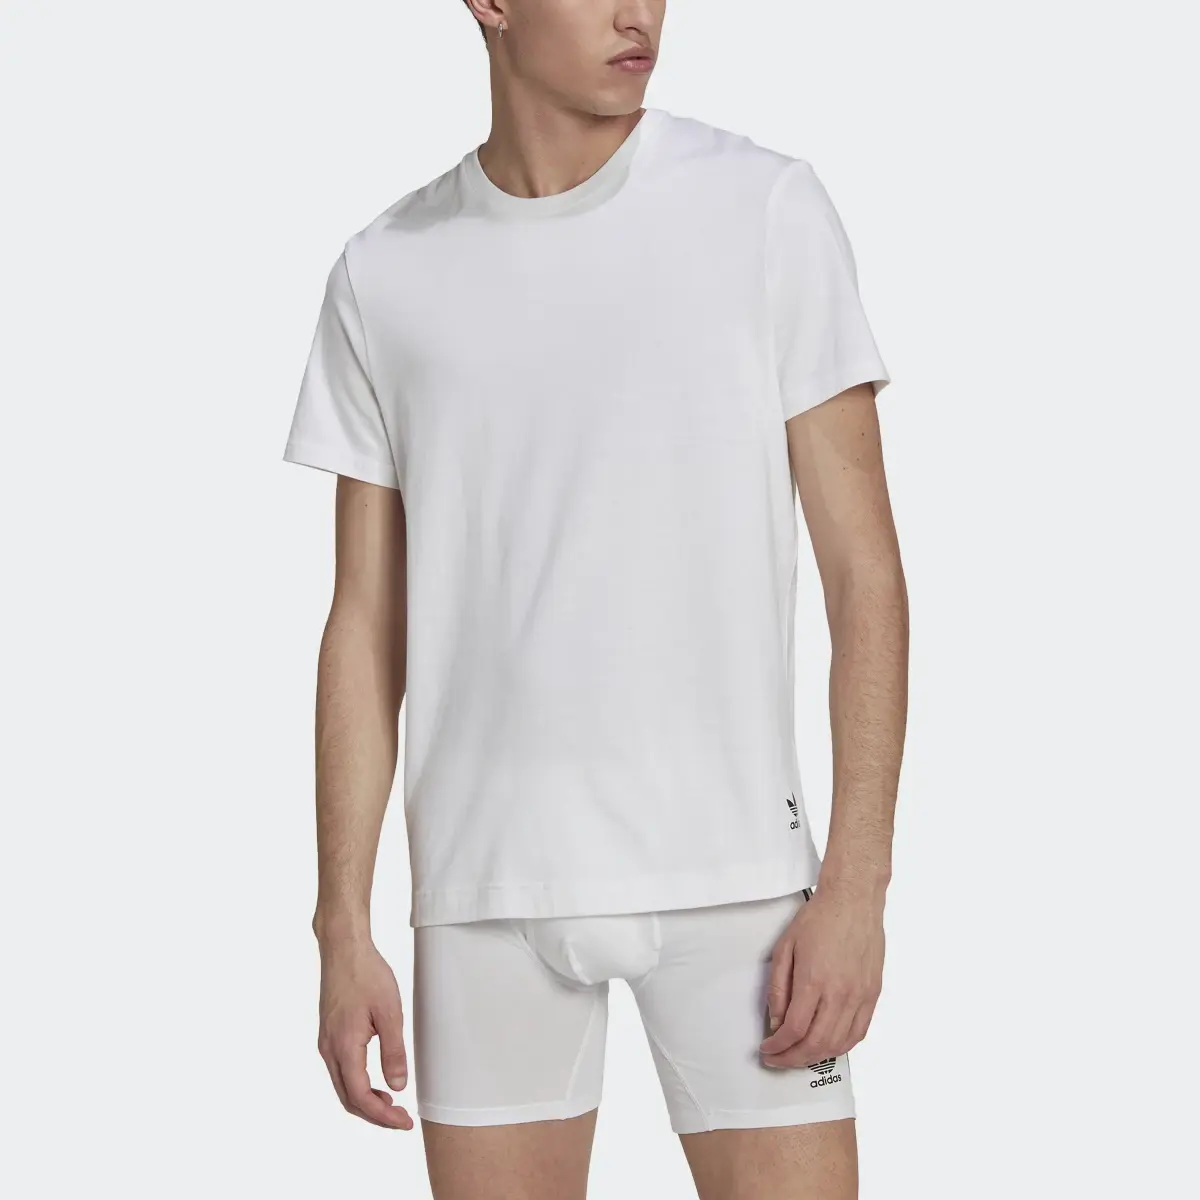 Adidas Comfort Core Cotton Crewneck T-Shirt Underwear. 1